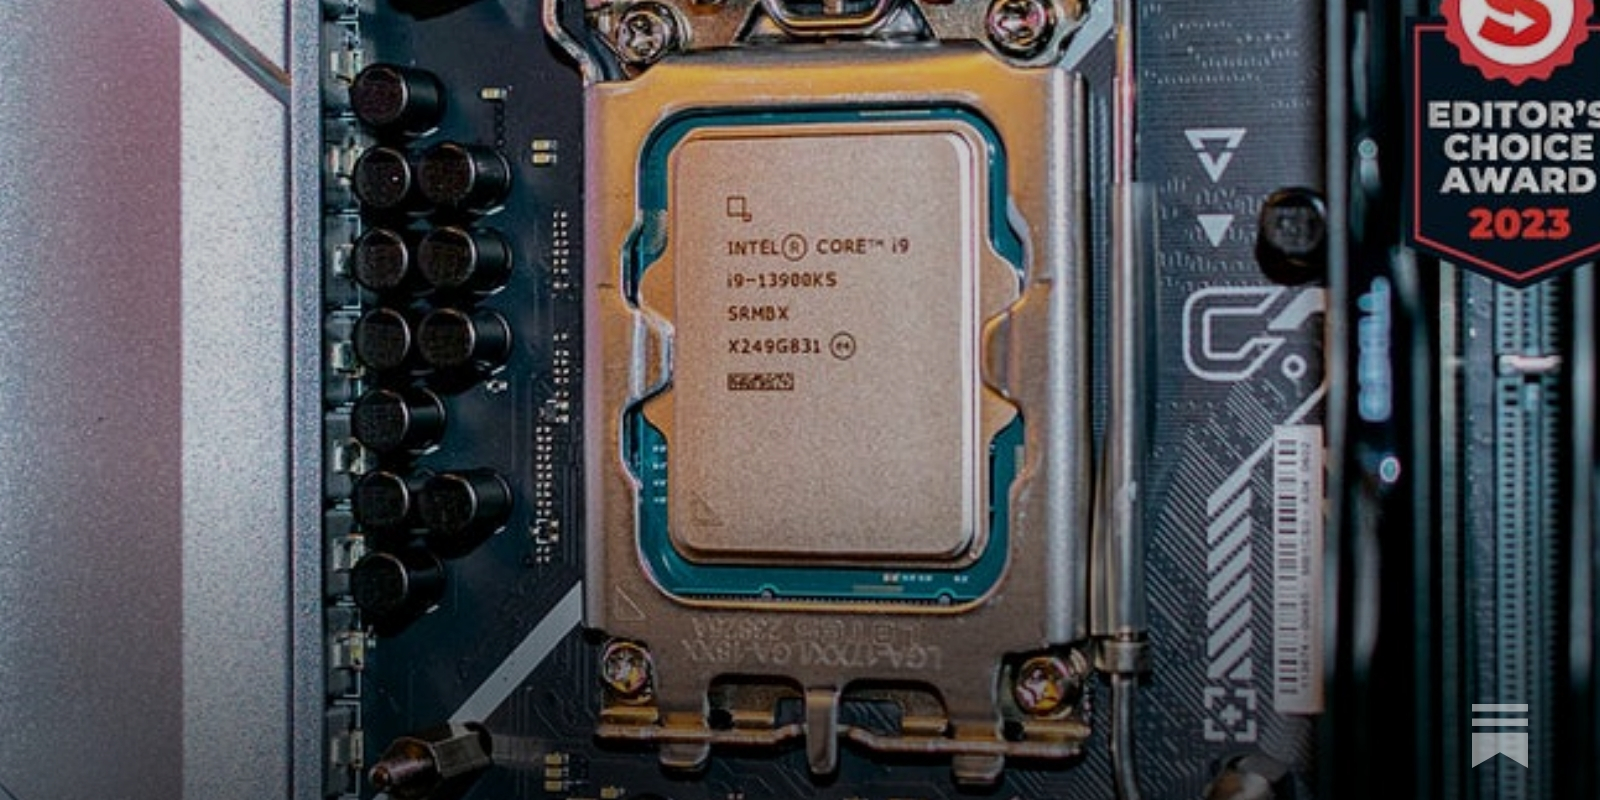 8Pack Polaris MK2 - Intel Core i9 13900KS - Extreme Overclocked PC